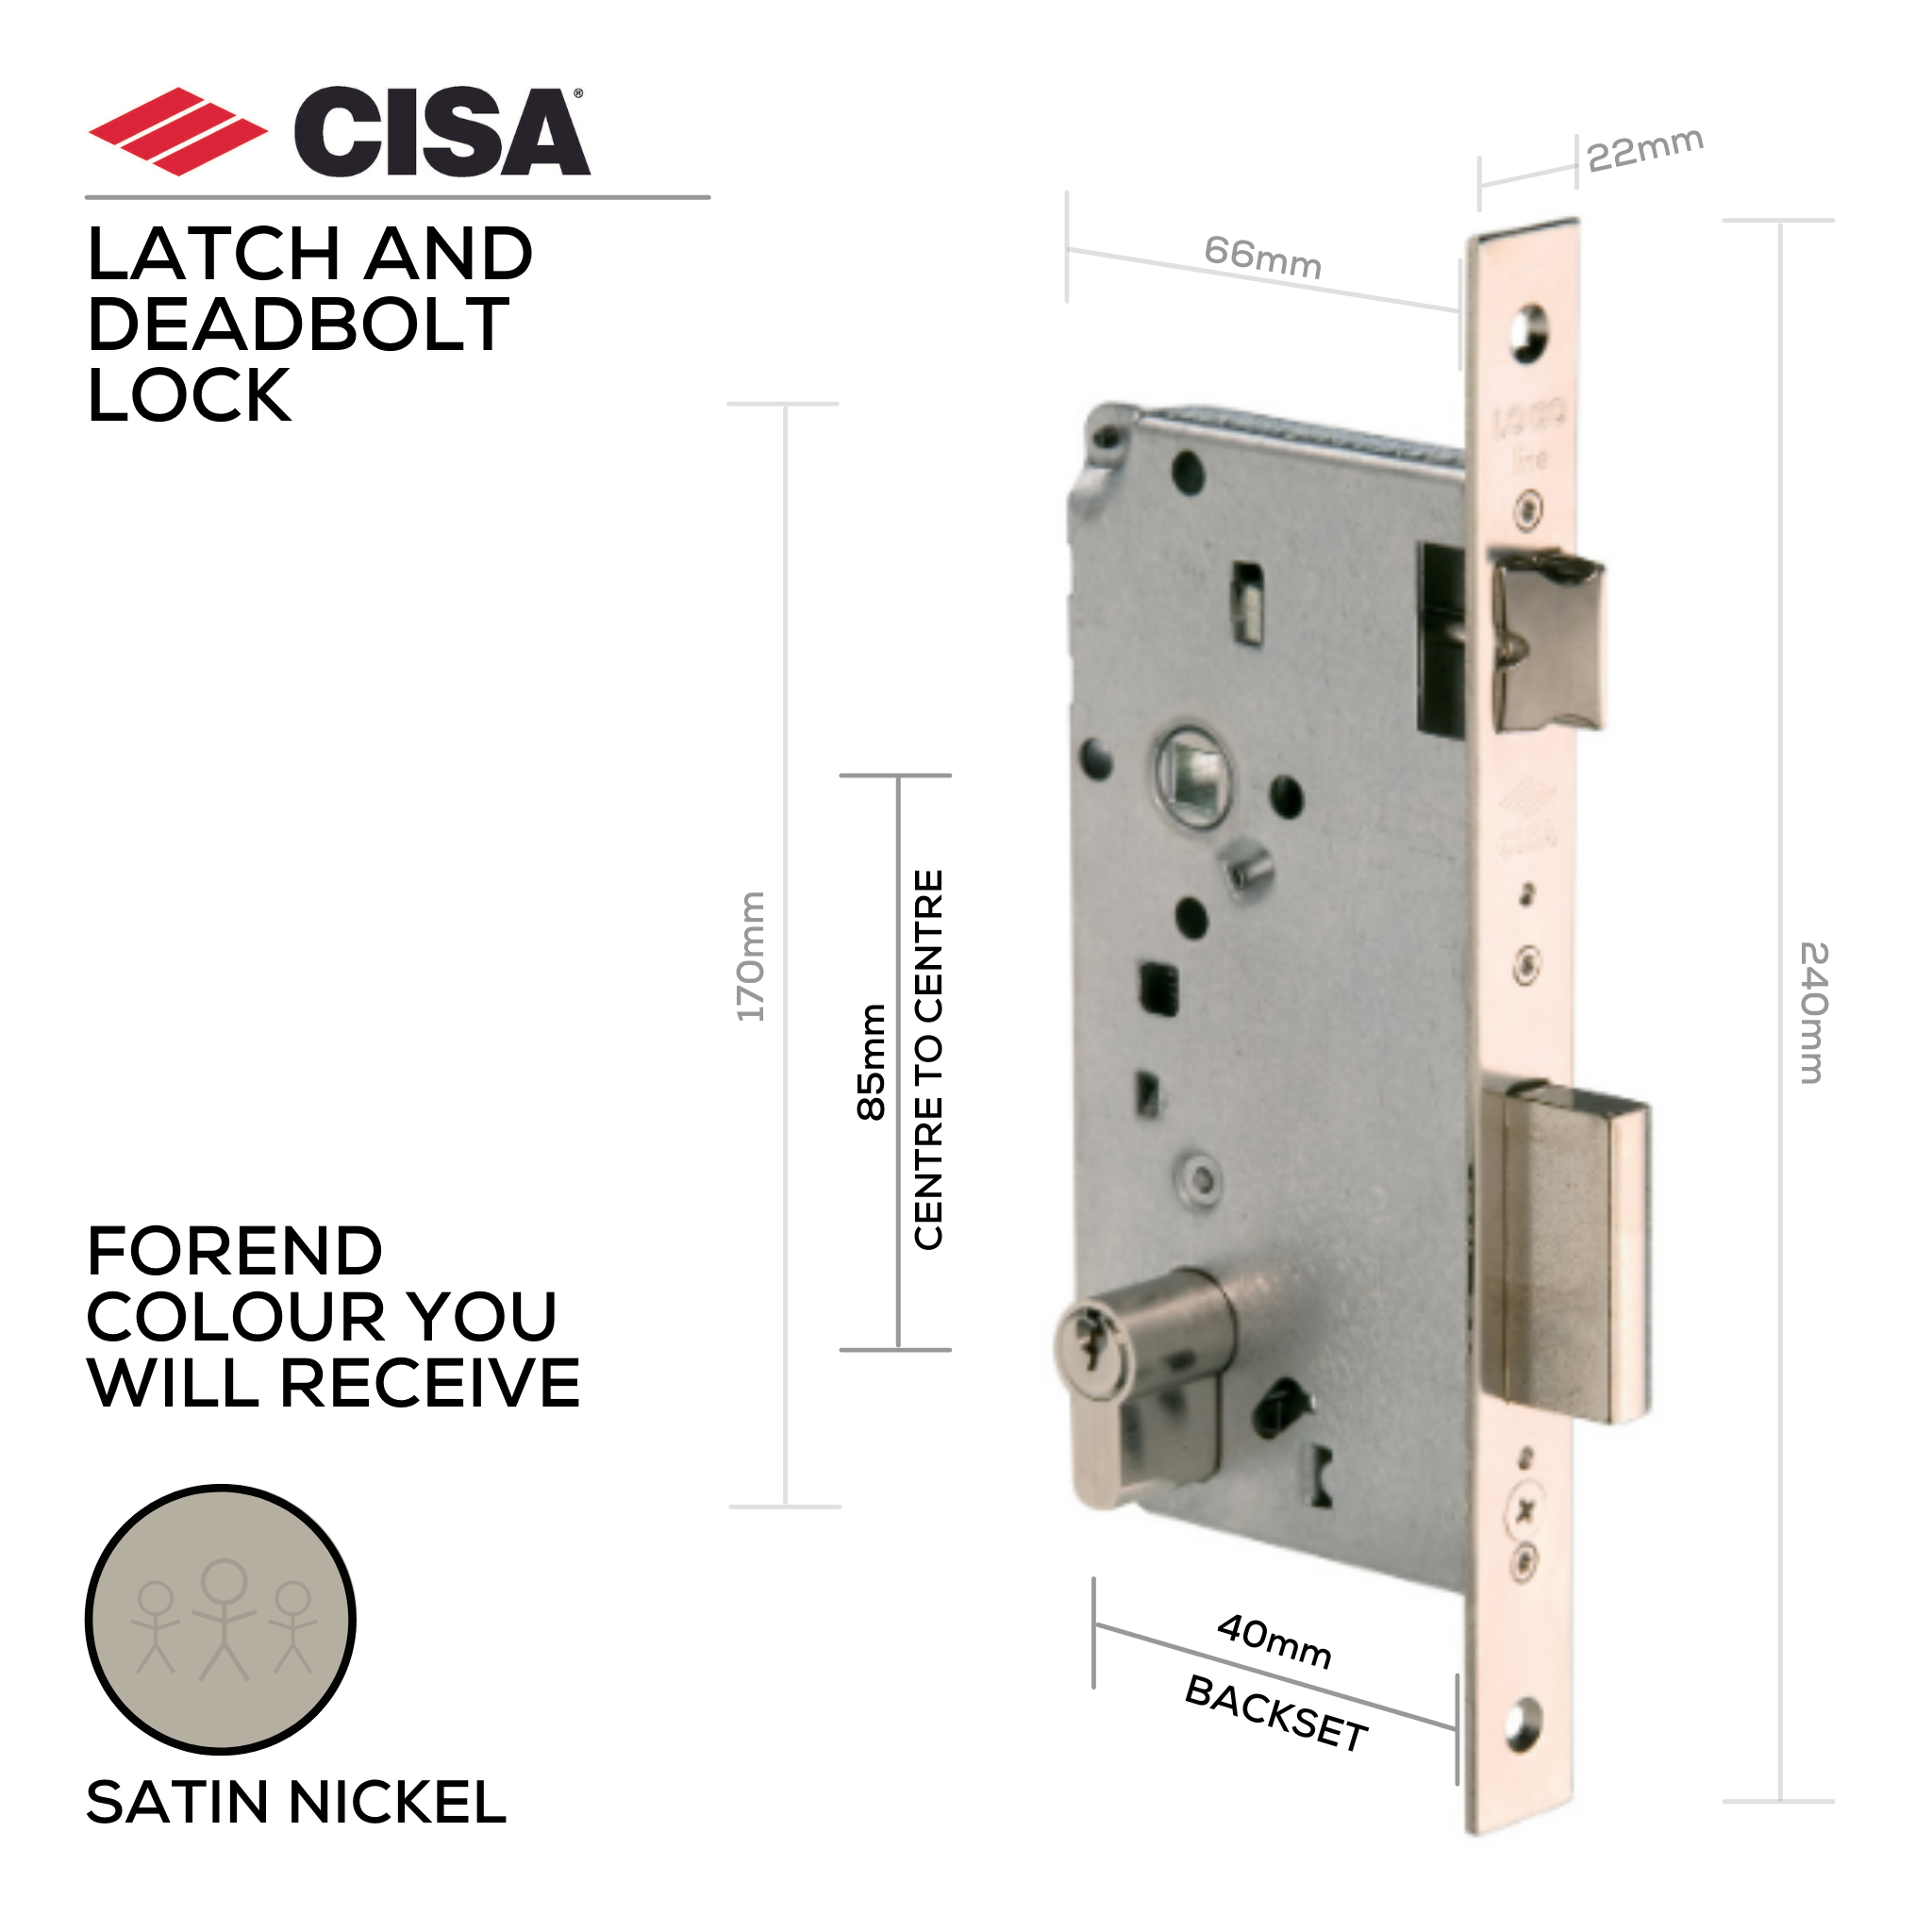 5C611-40-12, Latch & Deadbolt Lock, Euro Cylinder, Excluding Cylinder, 40mm (Backset), 85mm (ctc), Satin Nickel, CISA